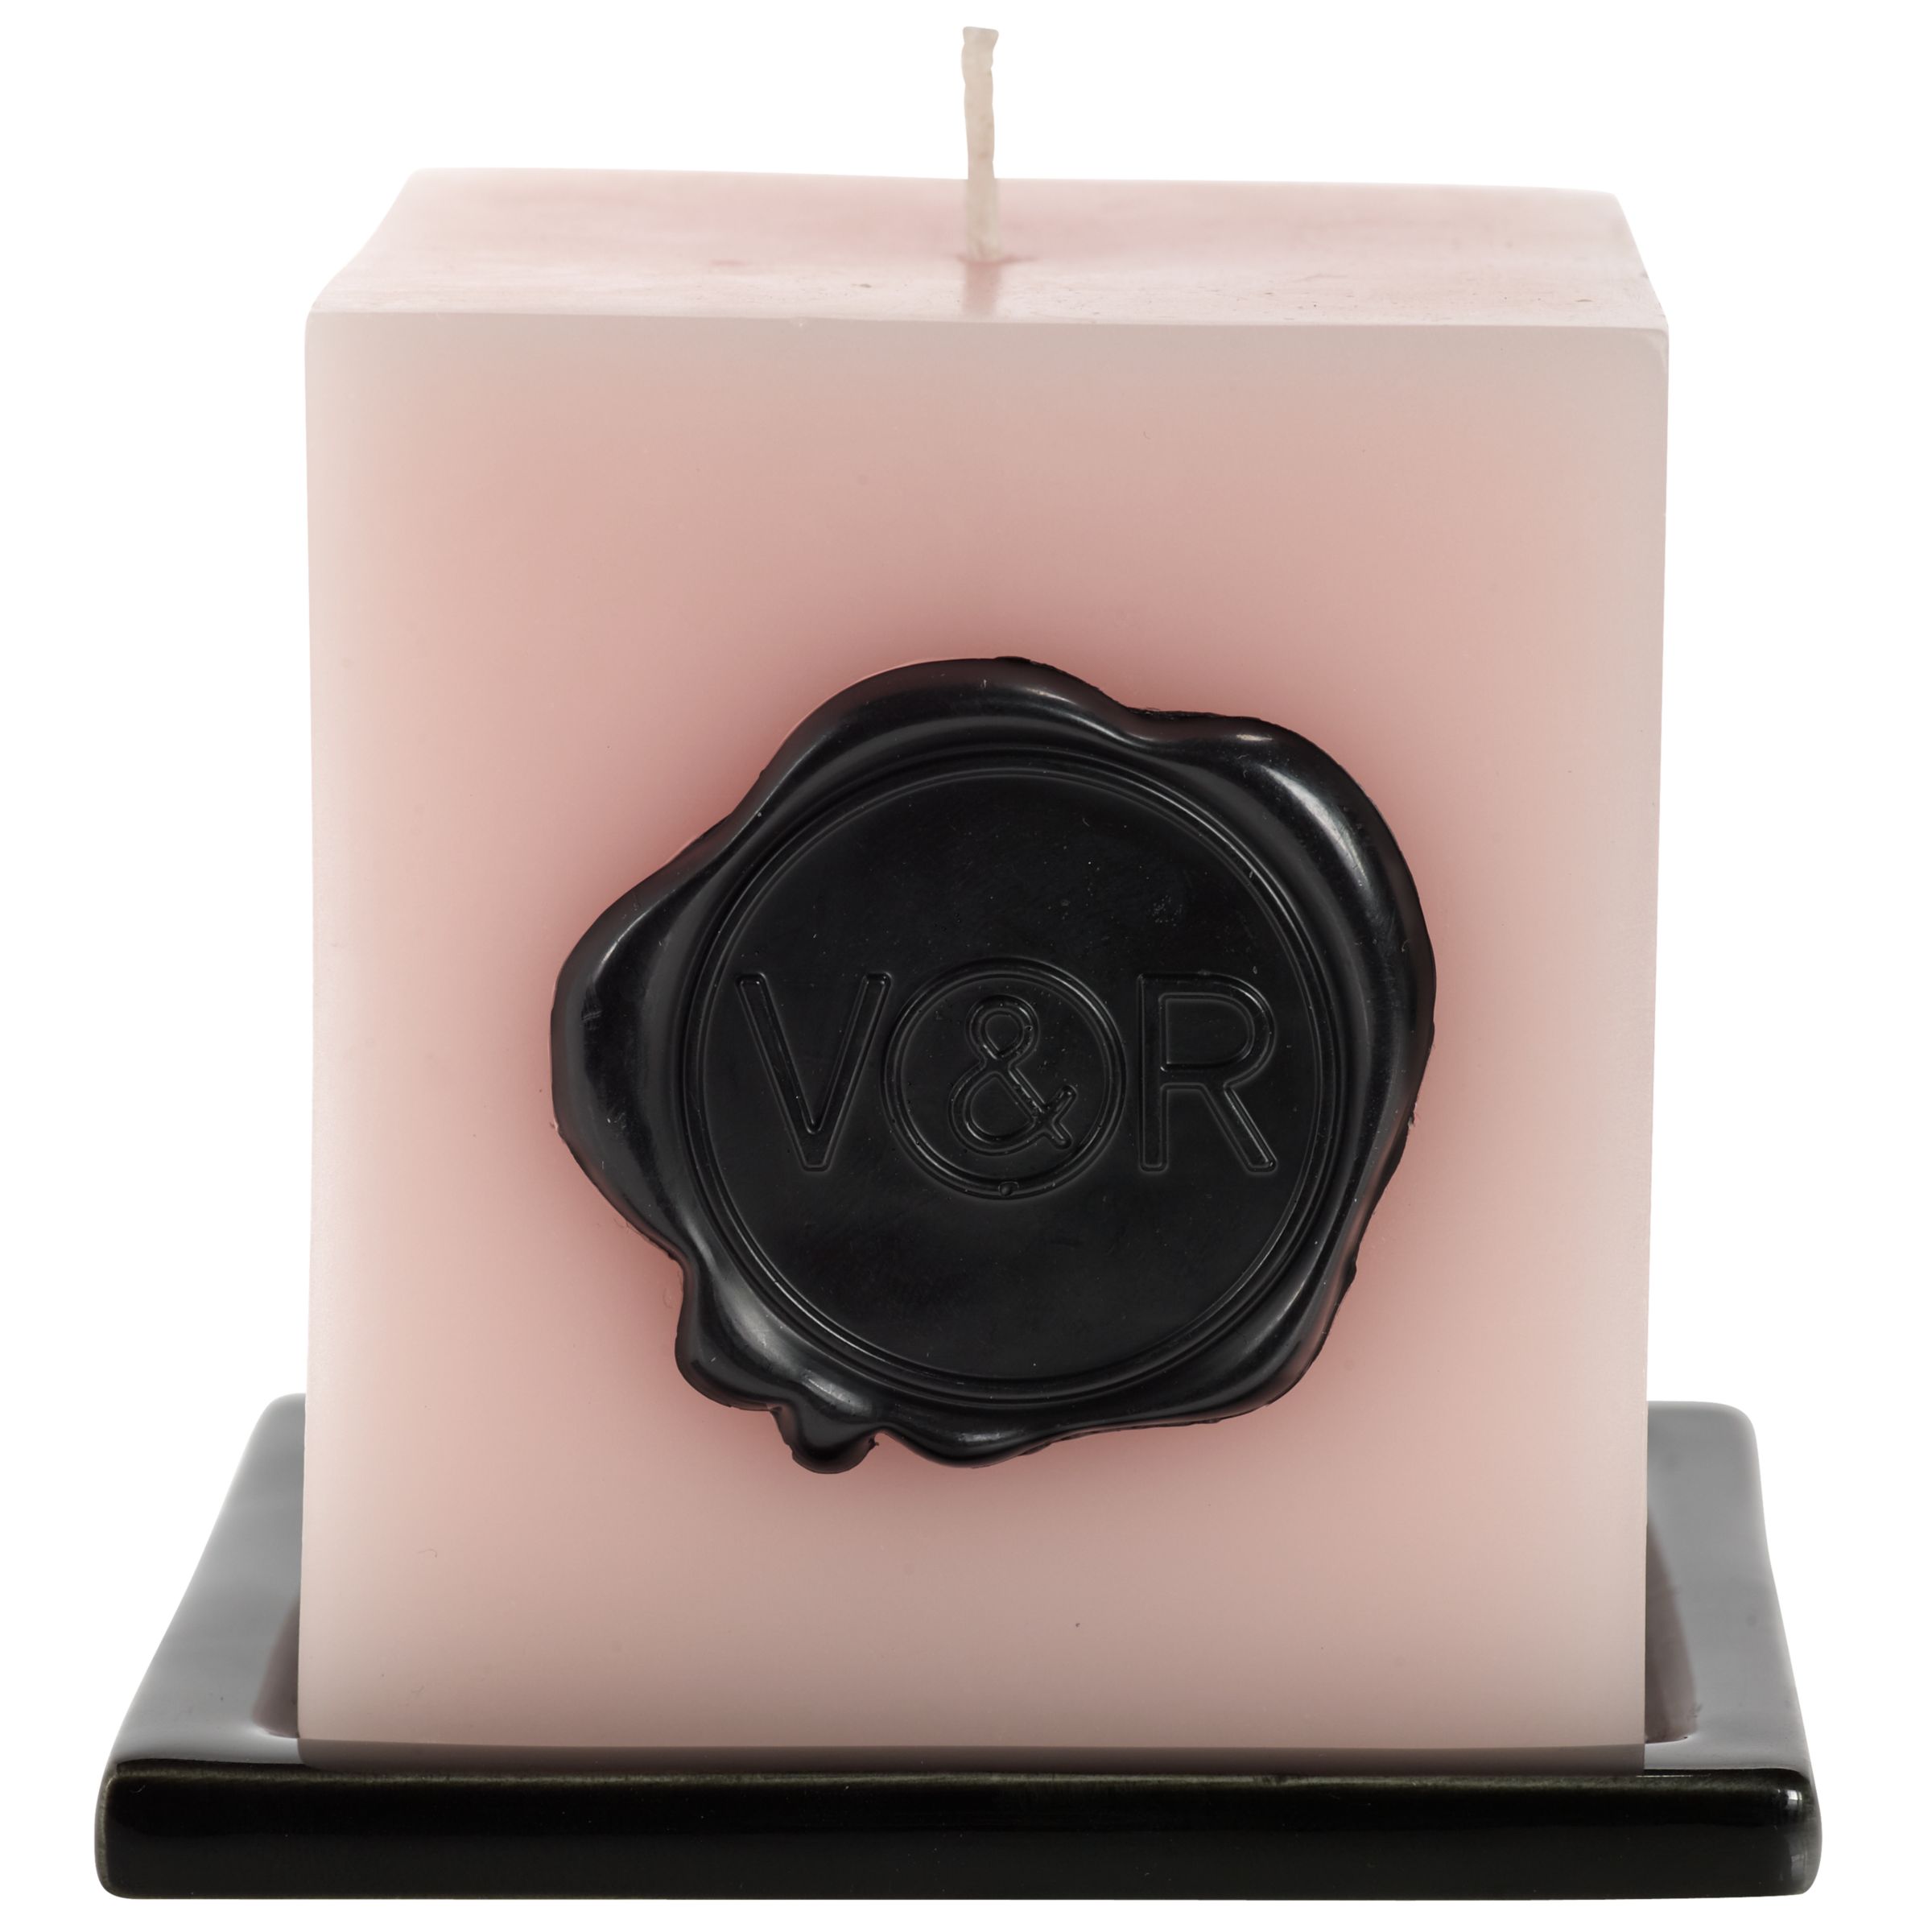 Buy Viktor & Rolf Flowerbomb Eau de Parfum Gift Set, 50ml